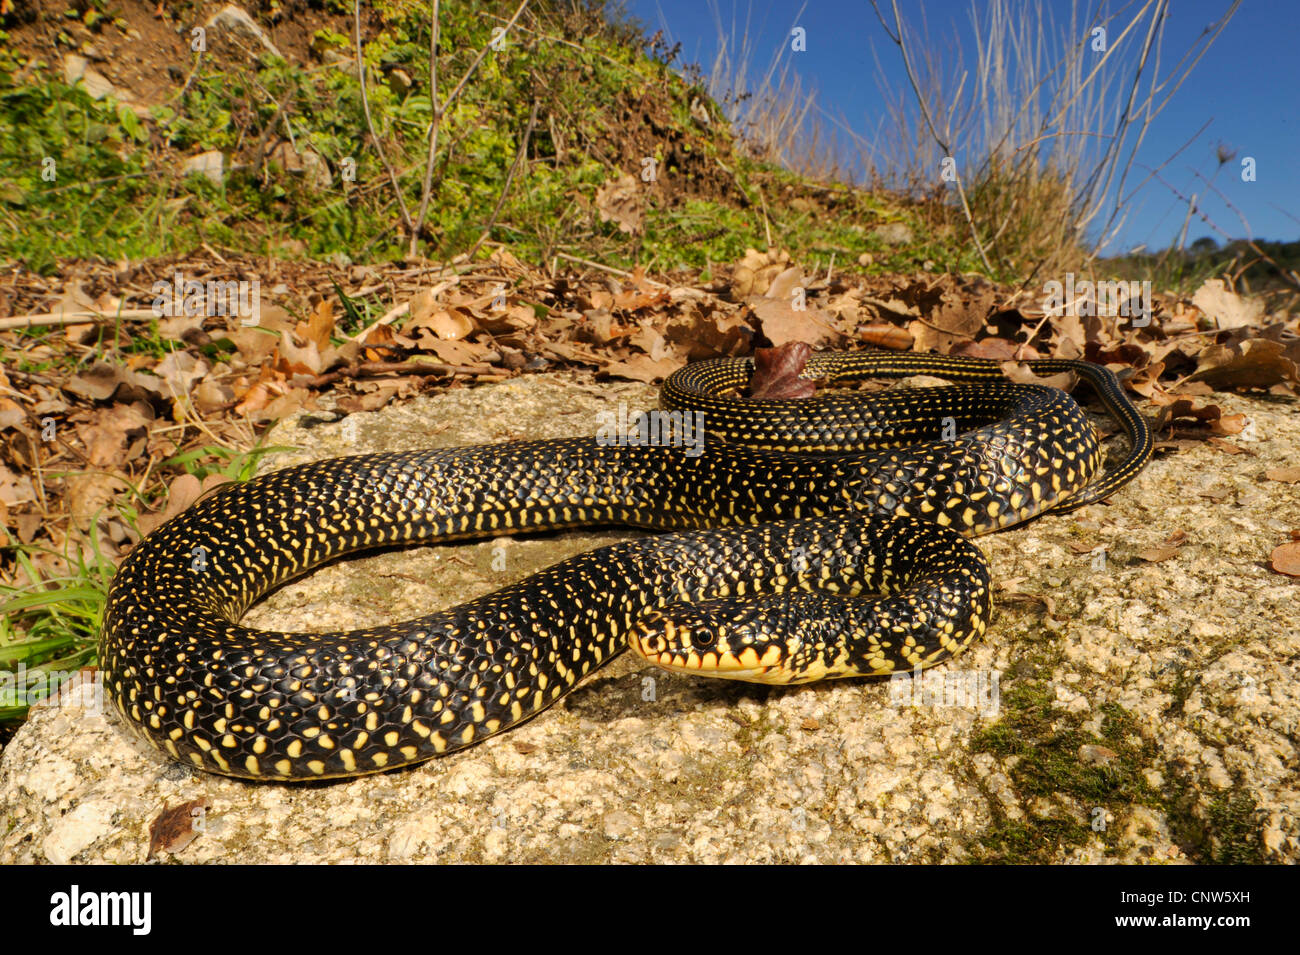 Whip européen d'Europe occidentale, snake snake whip vert-foncé, whipsnake (Coluber viridiflavus Hierophis viridiflavus,), dans l'habitat, de l'Italie, Sardaigne, Gallura, Olbia Banque D'Images